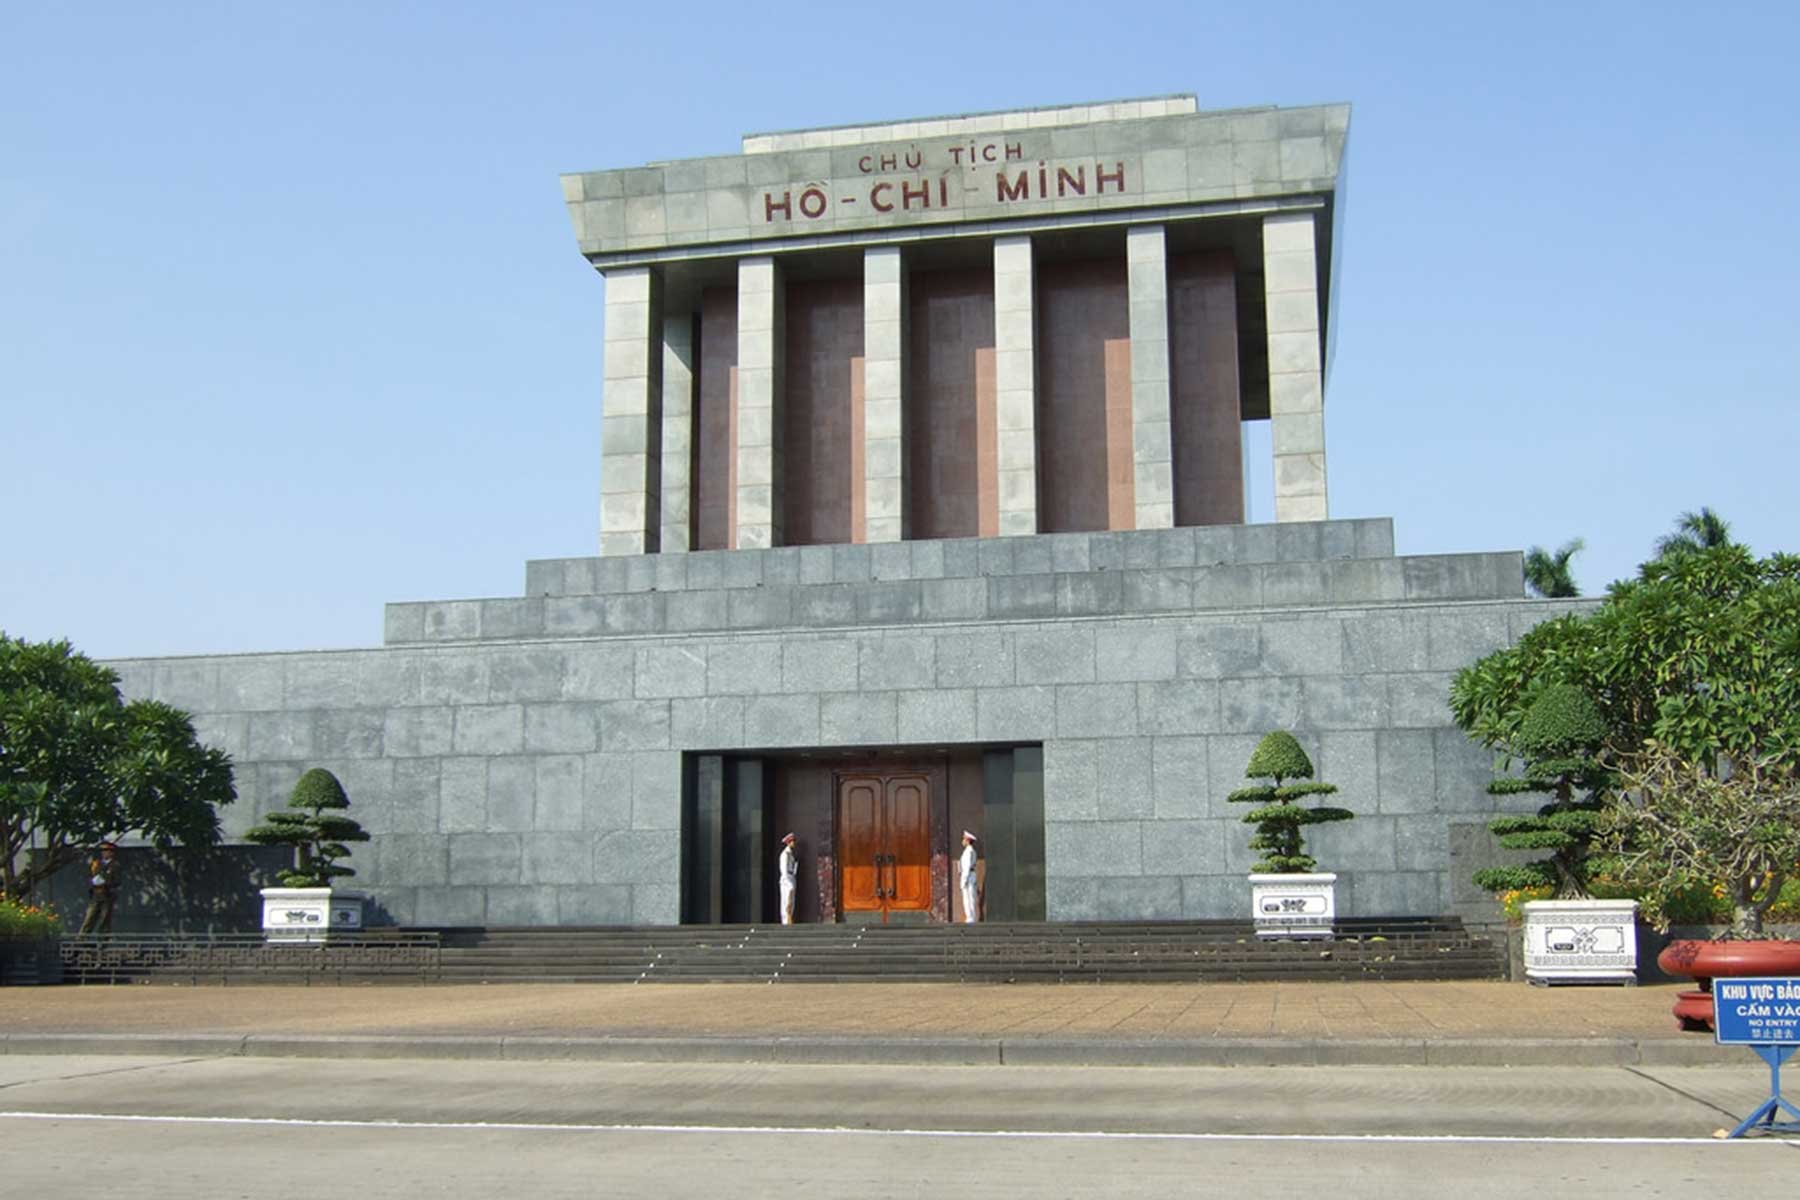 Ho Chi Minh’s Mausoleum in Hanoi